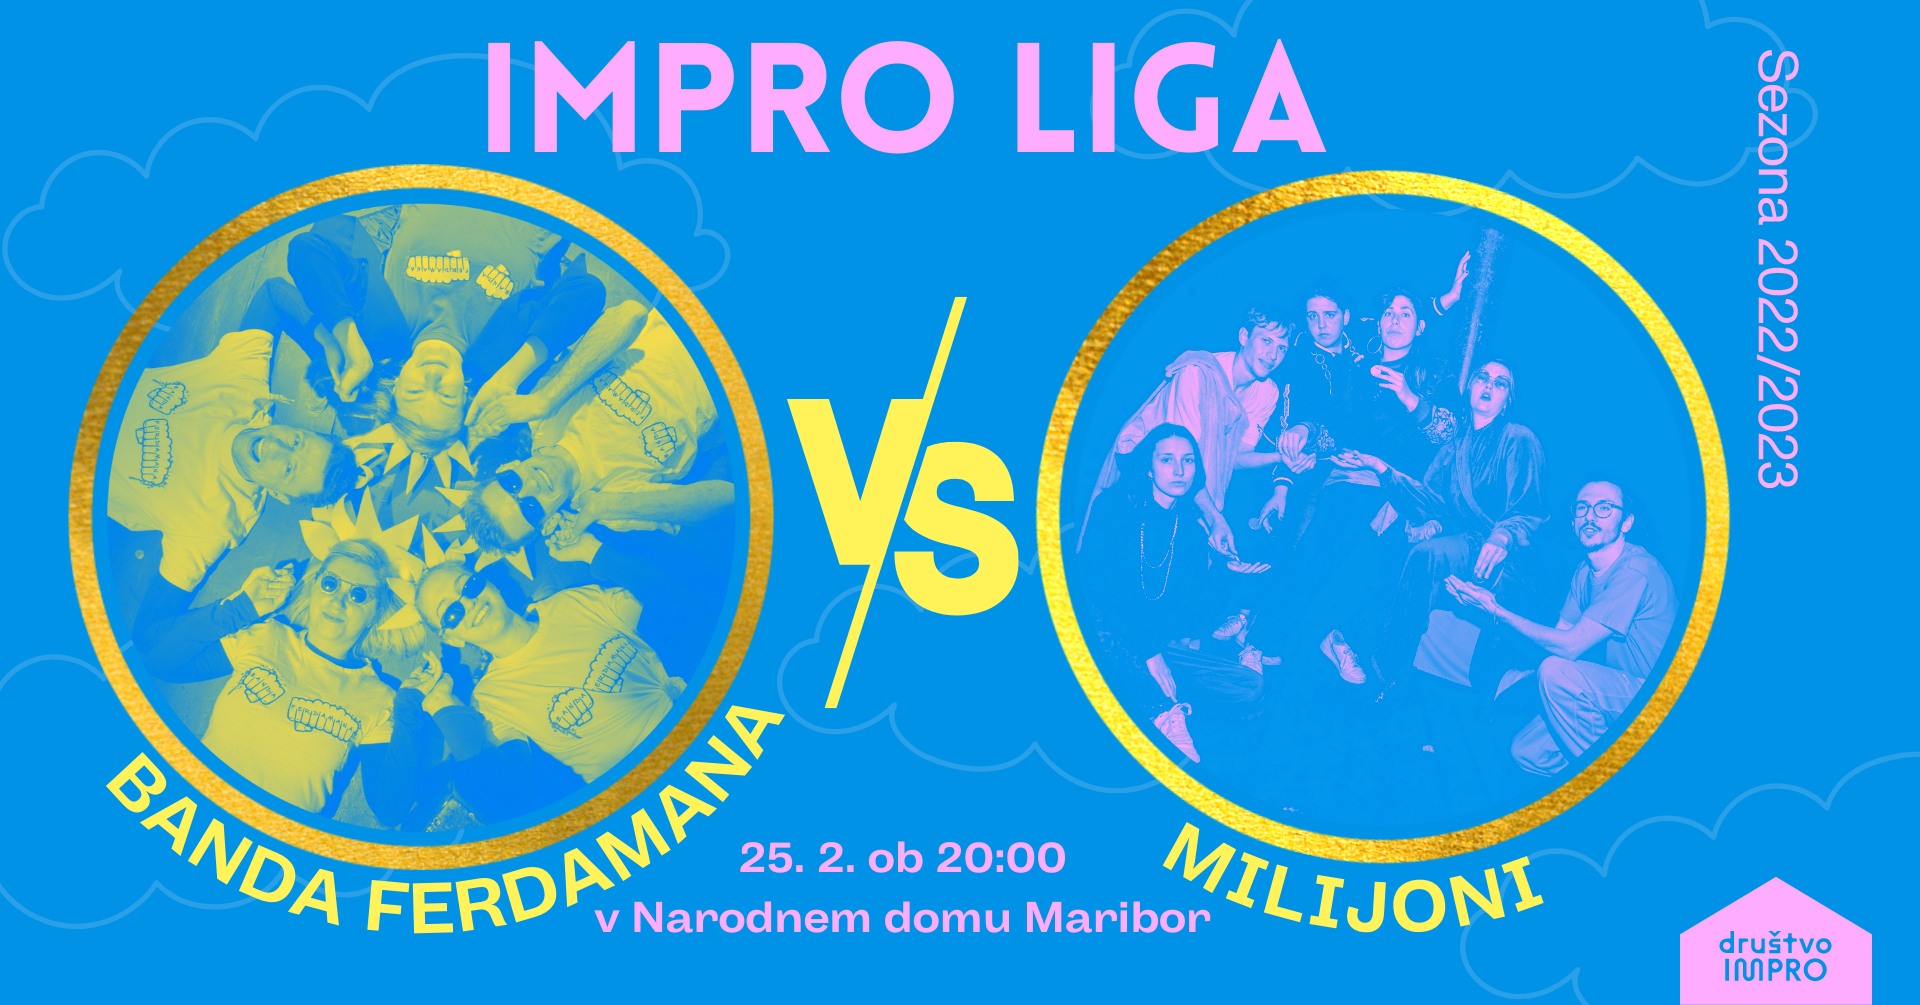 Naslovna slika dogodka: Impro liga: Milijoni vs Banda Ferdamana